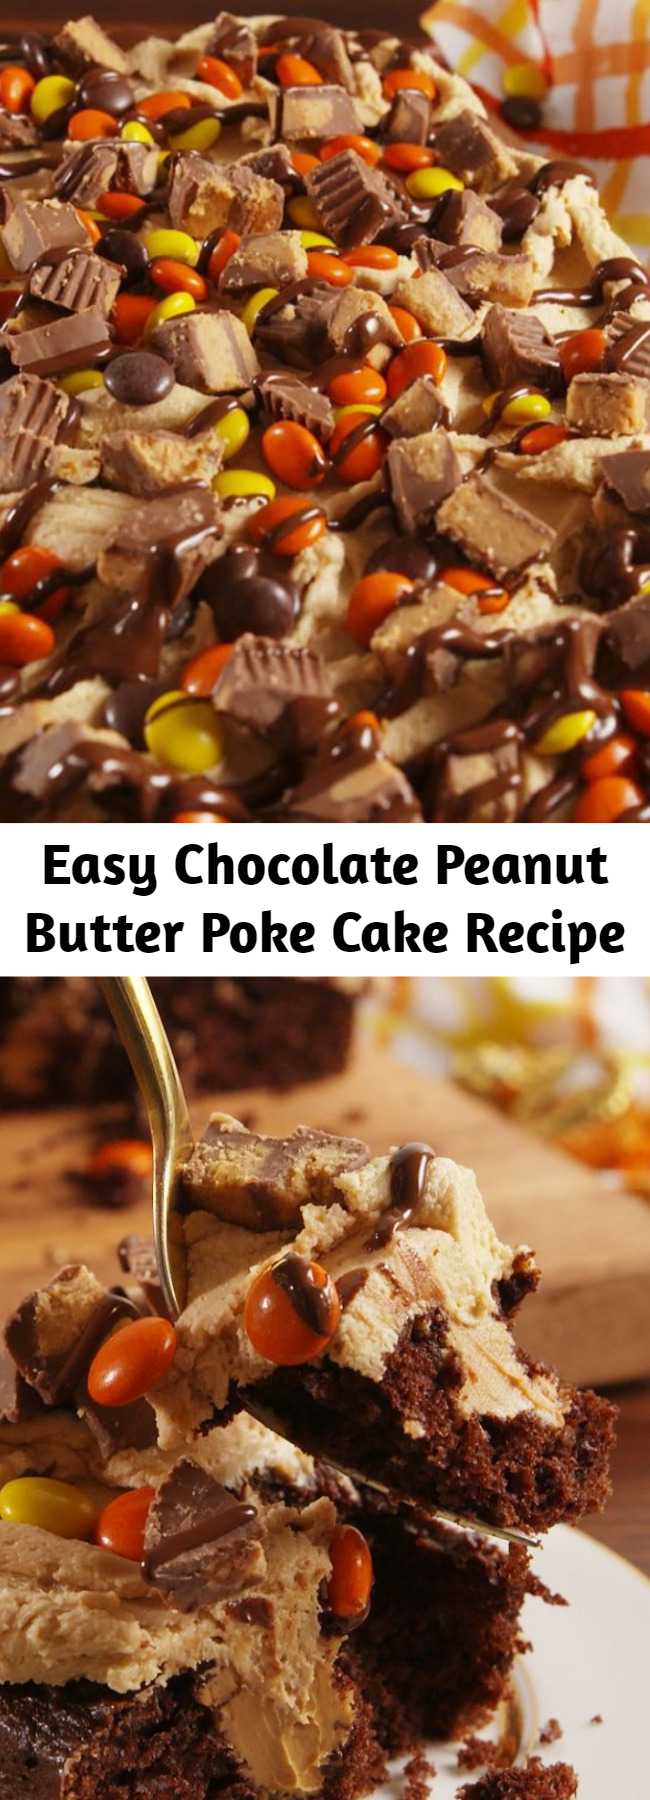 Easy Chocolate Peanut Butter Poke Cake Recipe - Chocolate peanut butter poke cake is for serious butter lovers only. #easy #recipe #chocolate #peanutbutter #pb #pokecake #cake #dessert #reeses #reesespieces #baking